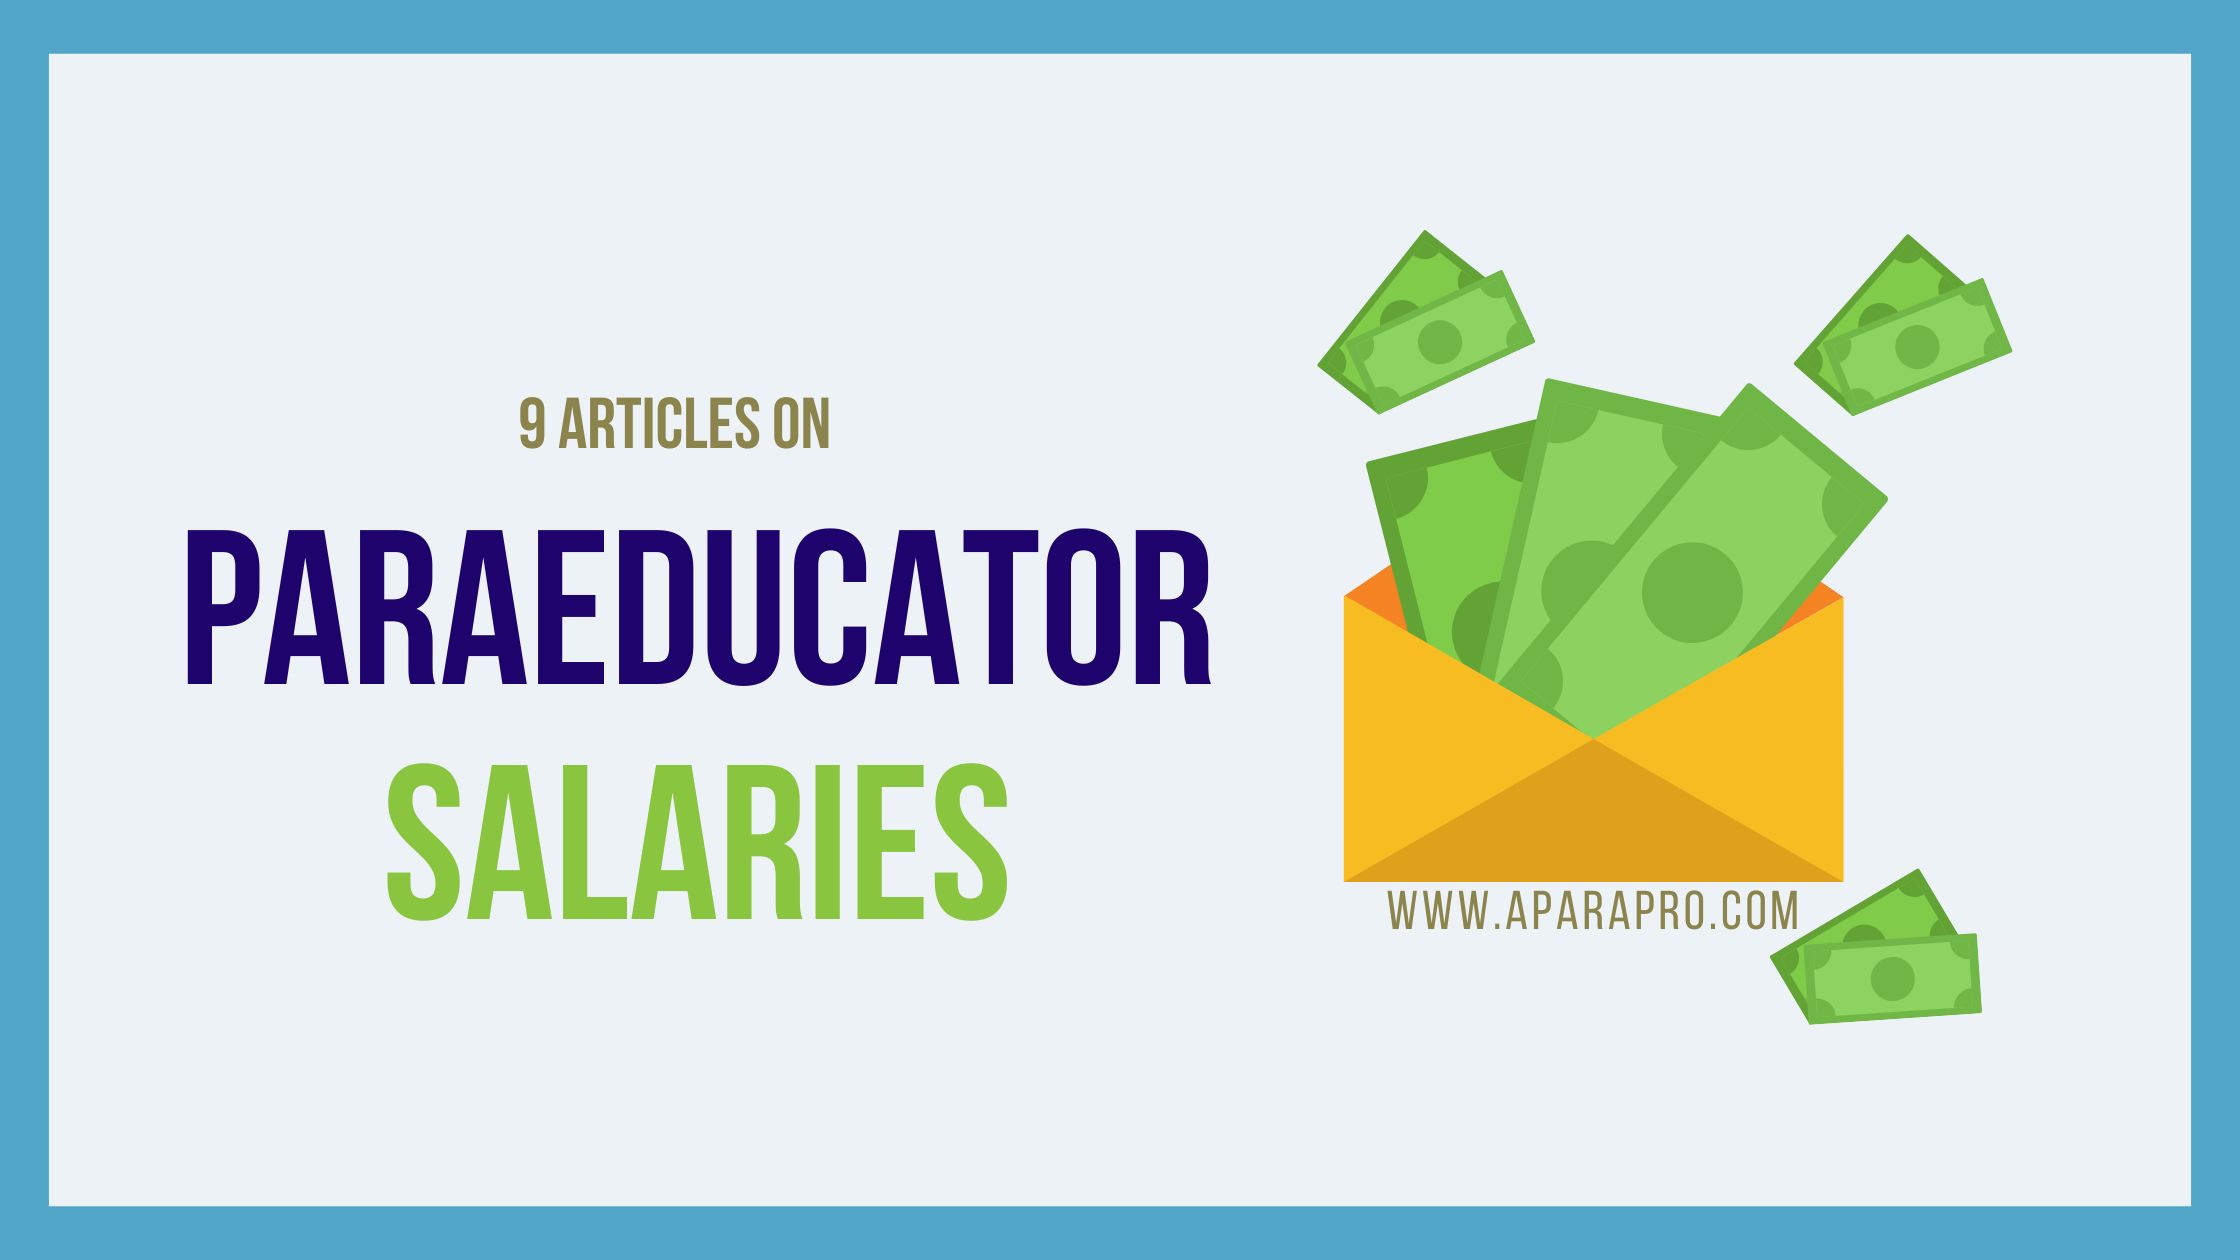 9 articles on paraeducator salaries by aparapro